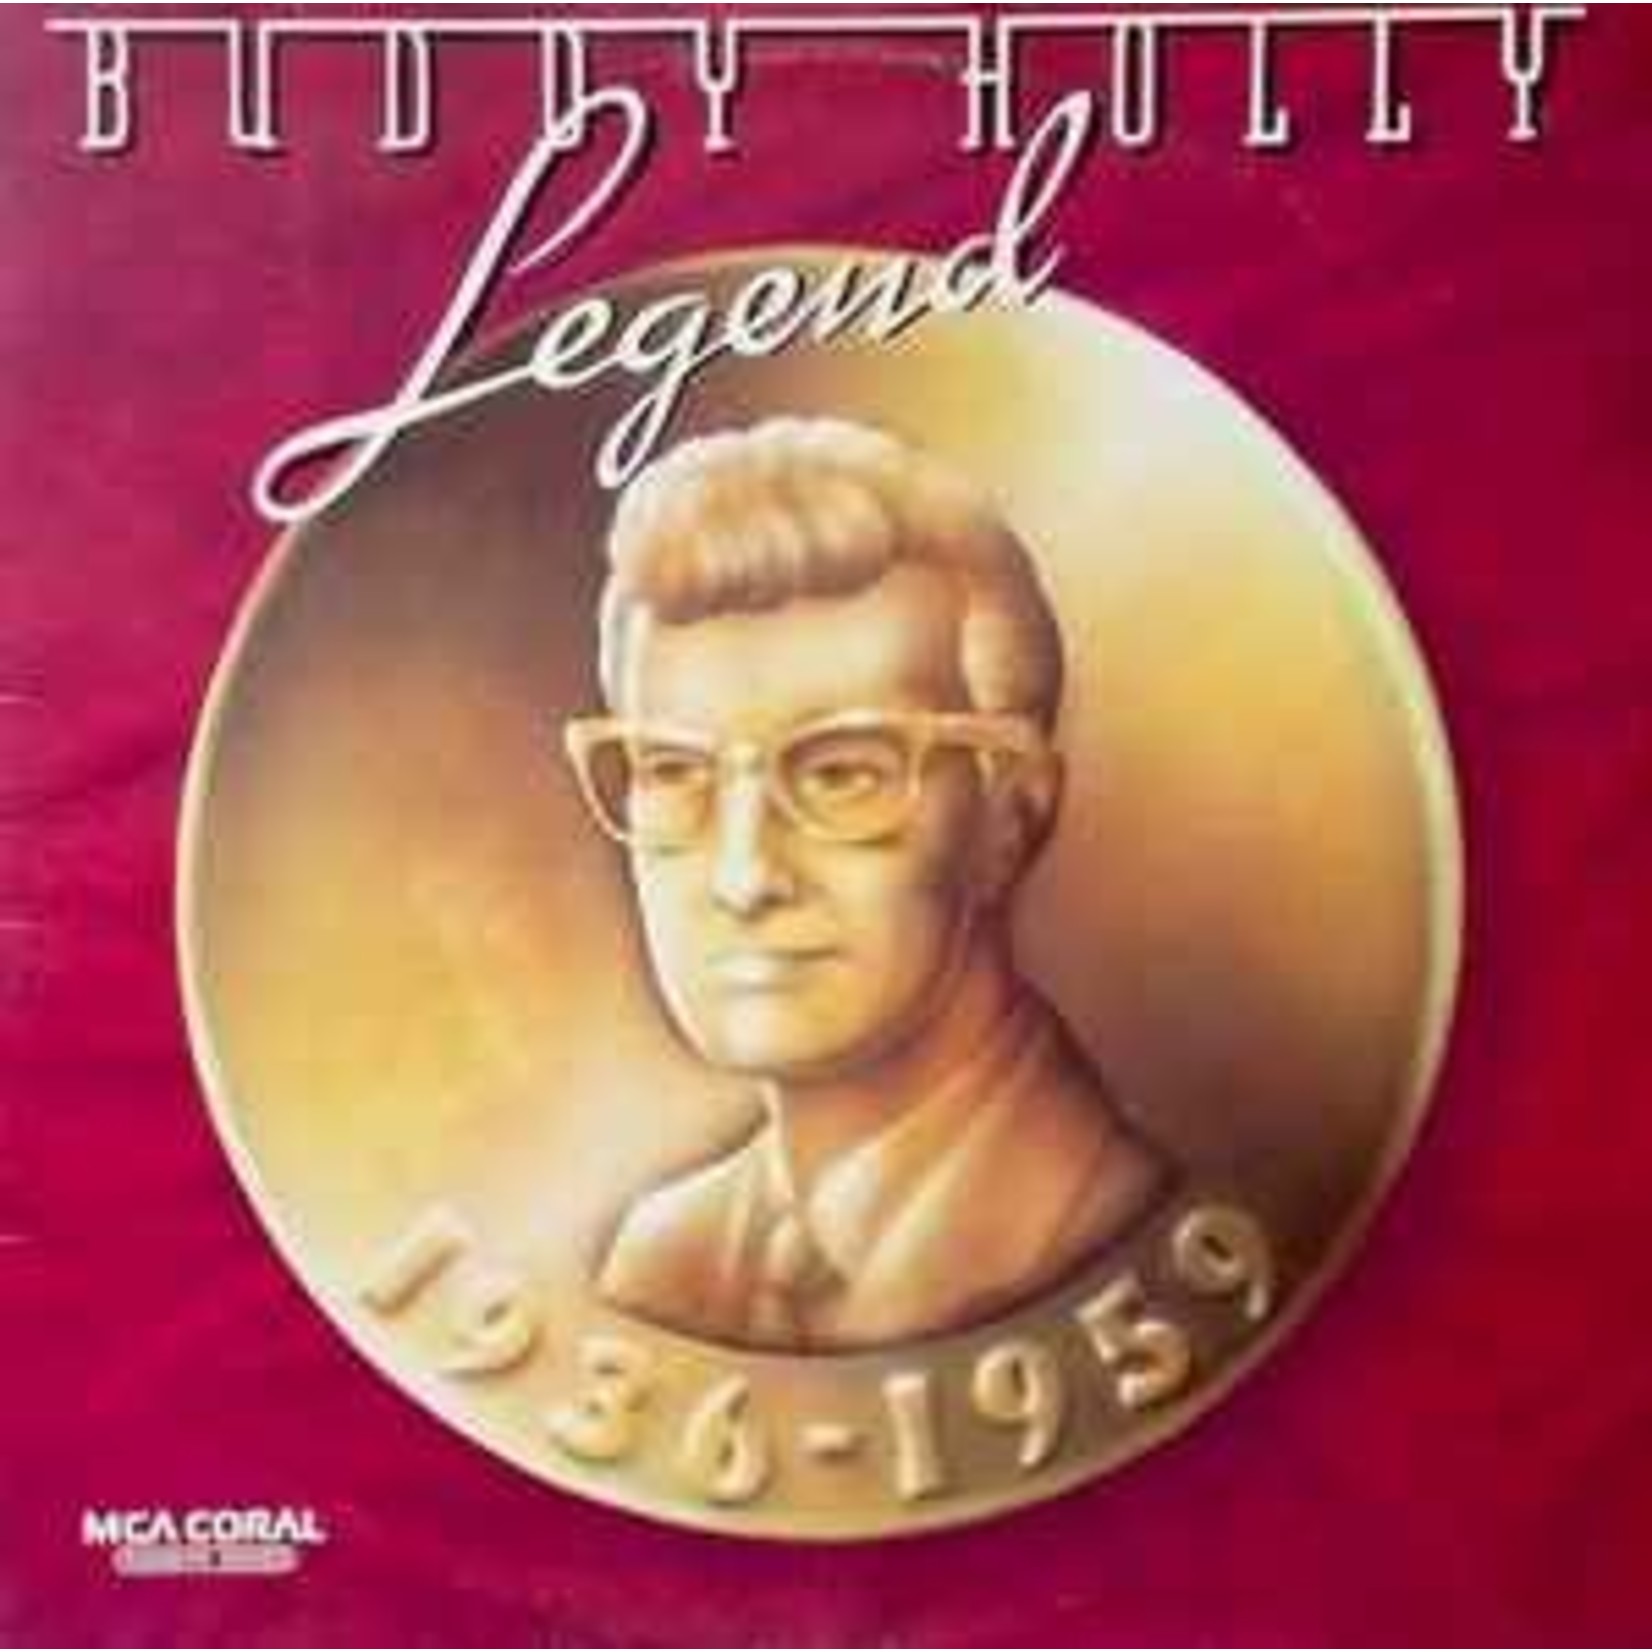 [Vintage] Buddy Holly - Legend (2LP)